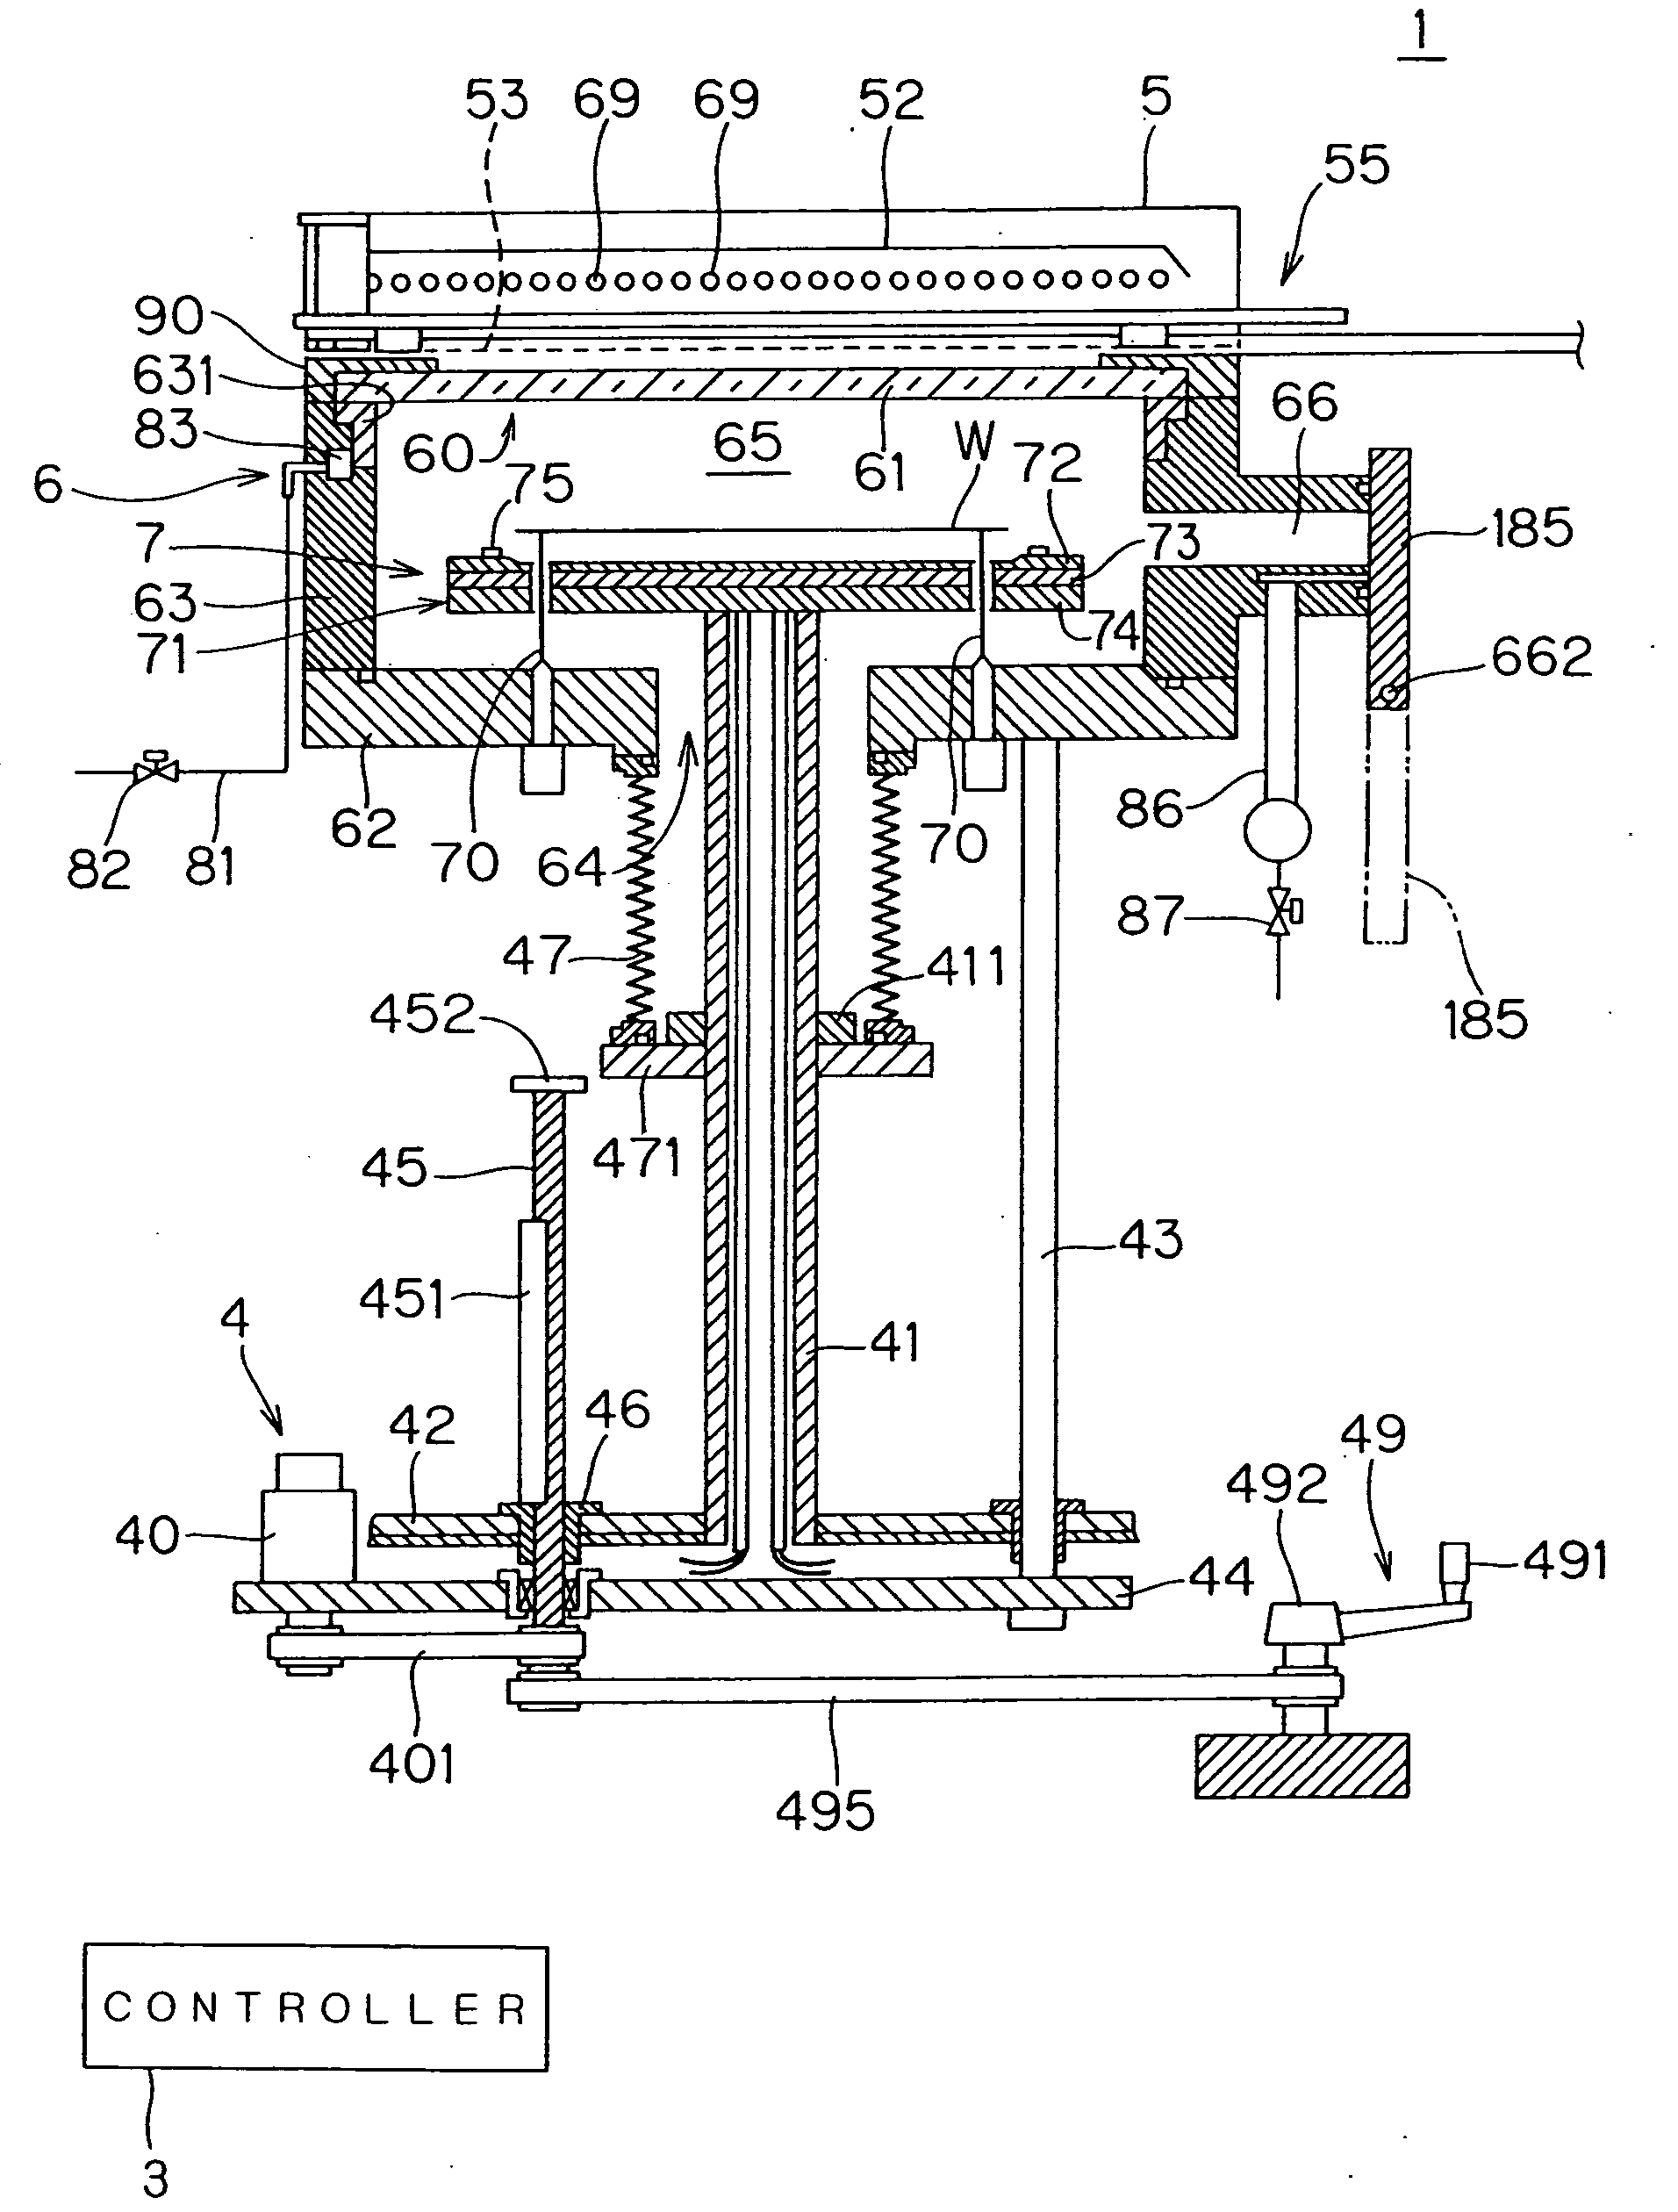 Heat treatment apparatus of light emission type